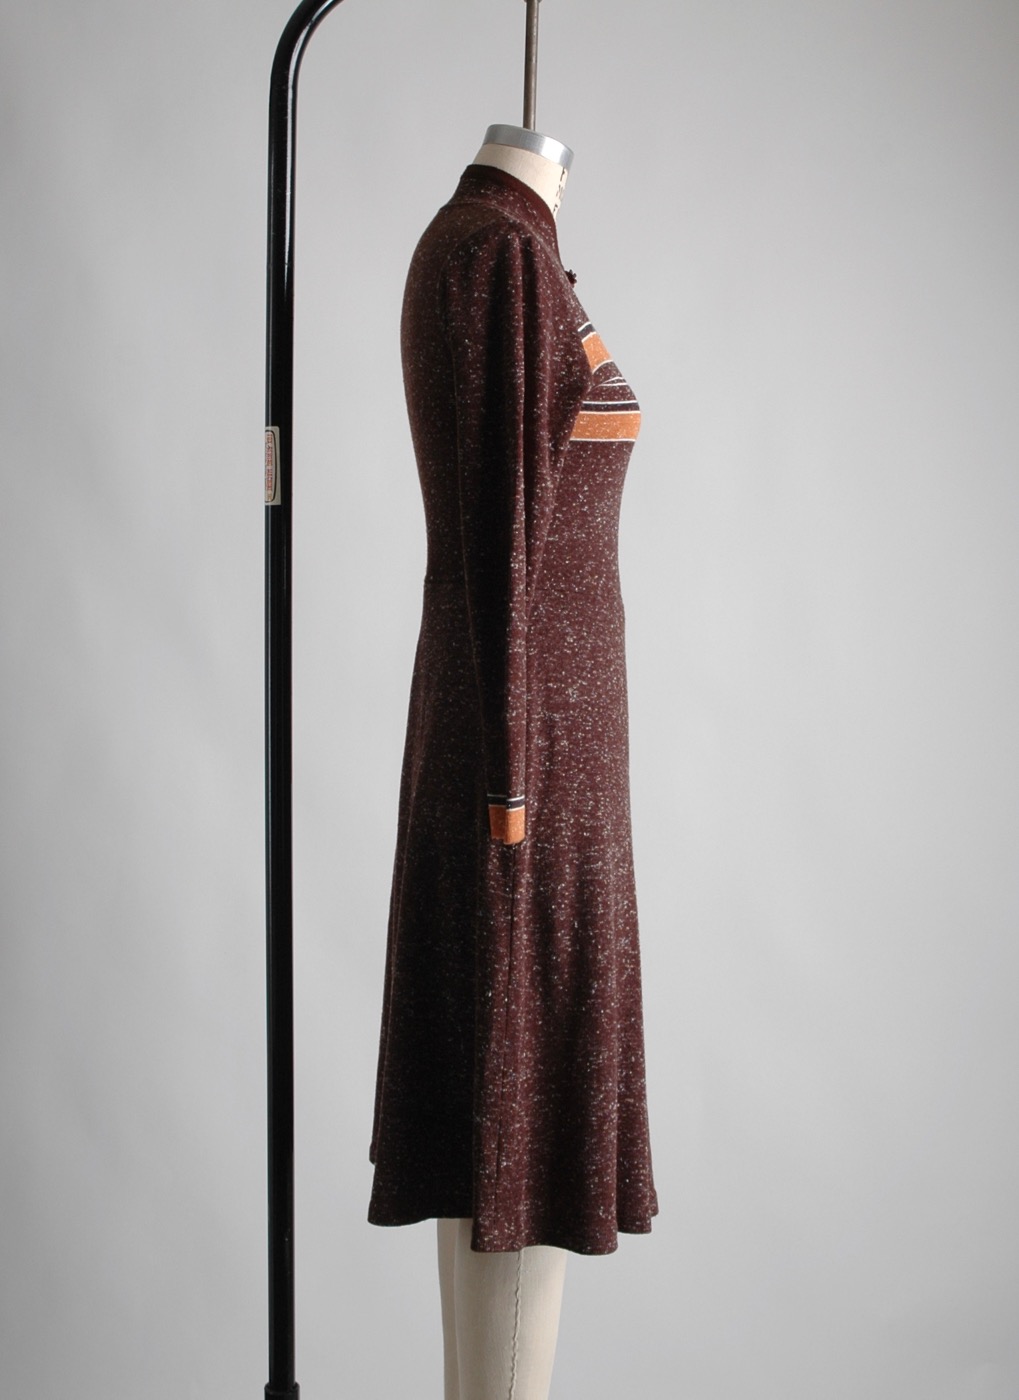 1970s Mandarin collar brown knit sweater dress